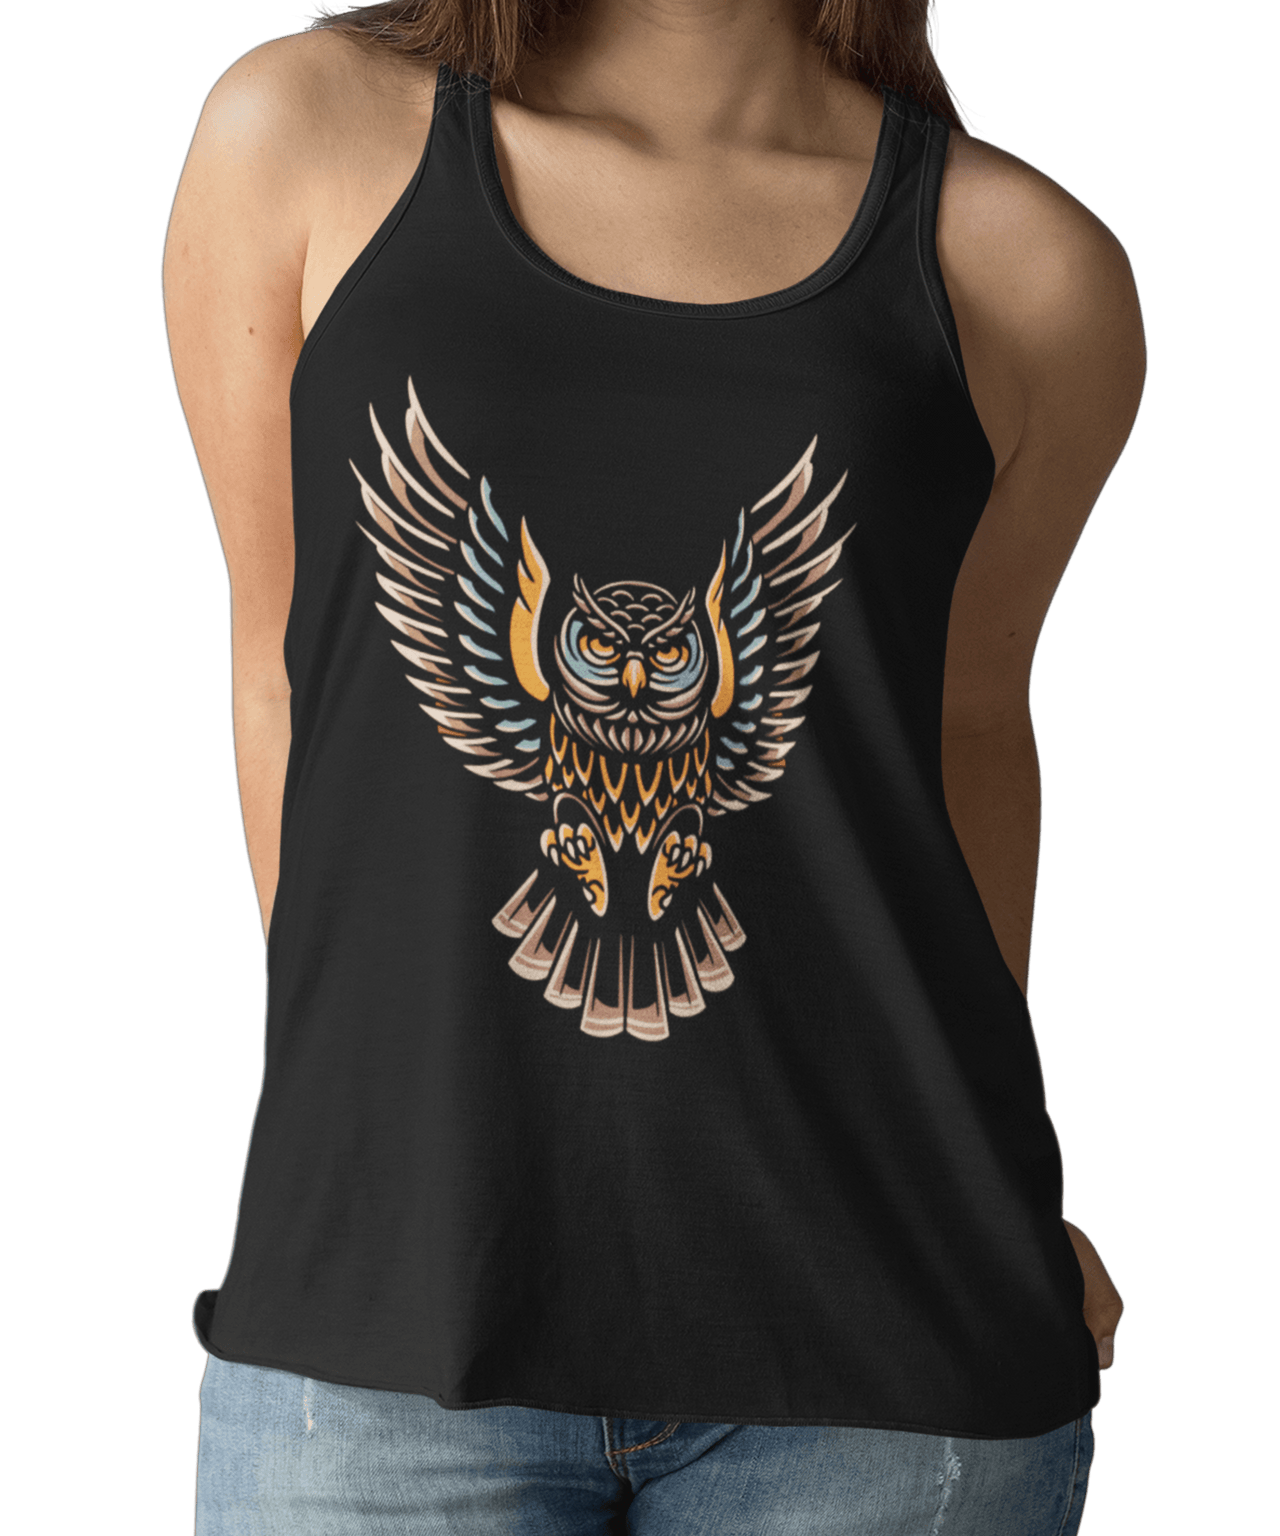 Owl Tattoo Design Adult Womens Vest Top 8Ball